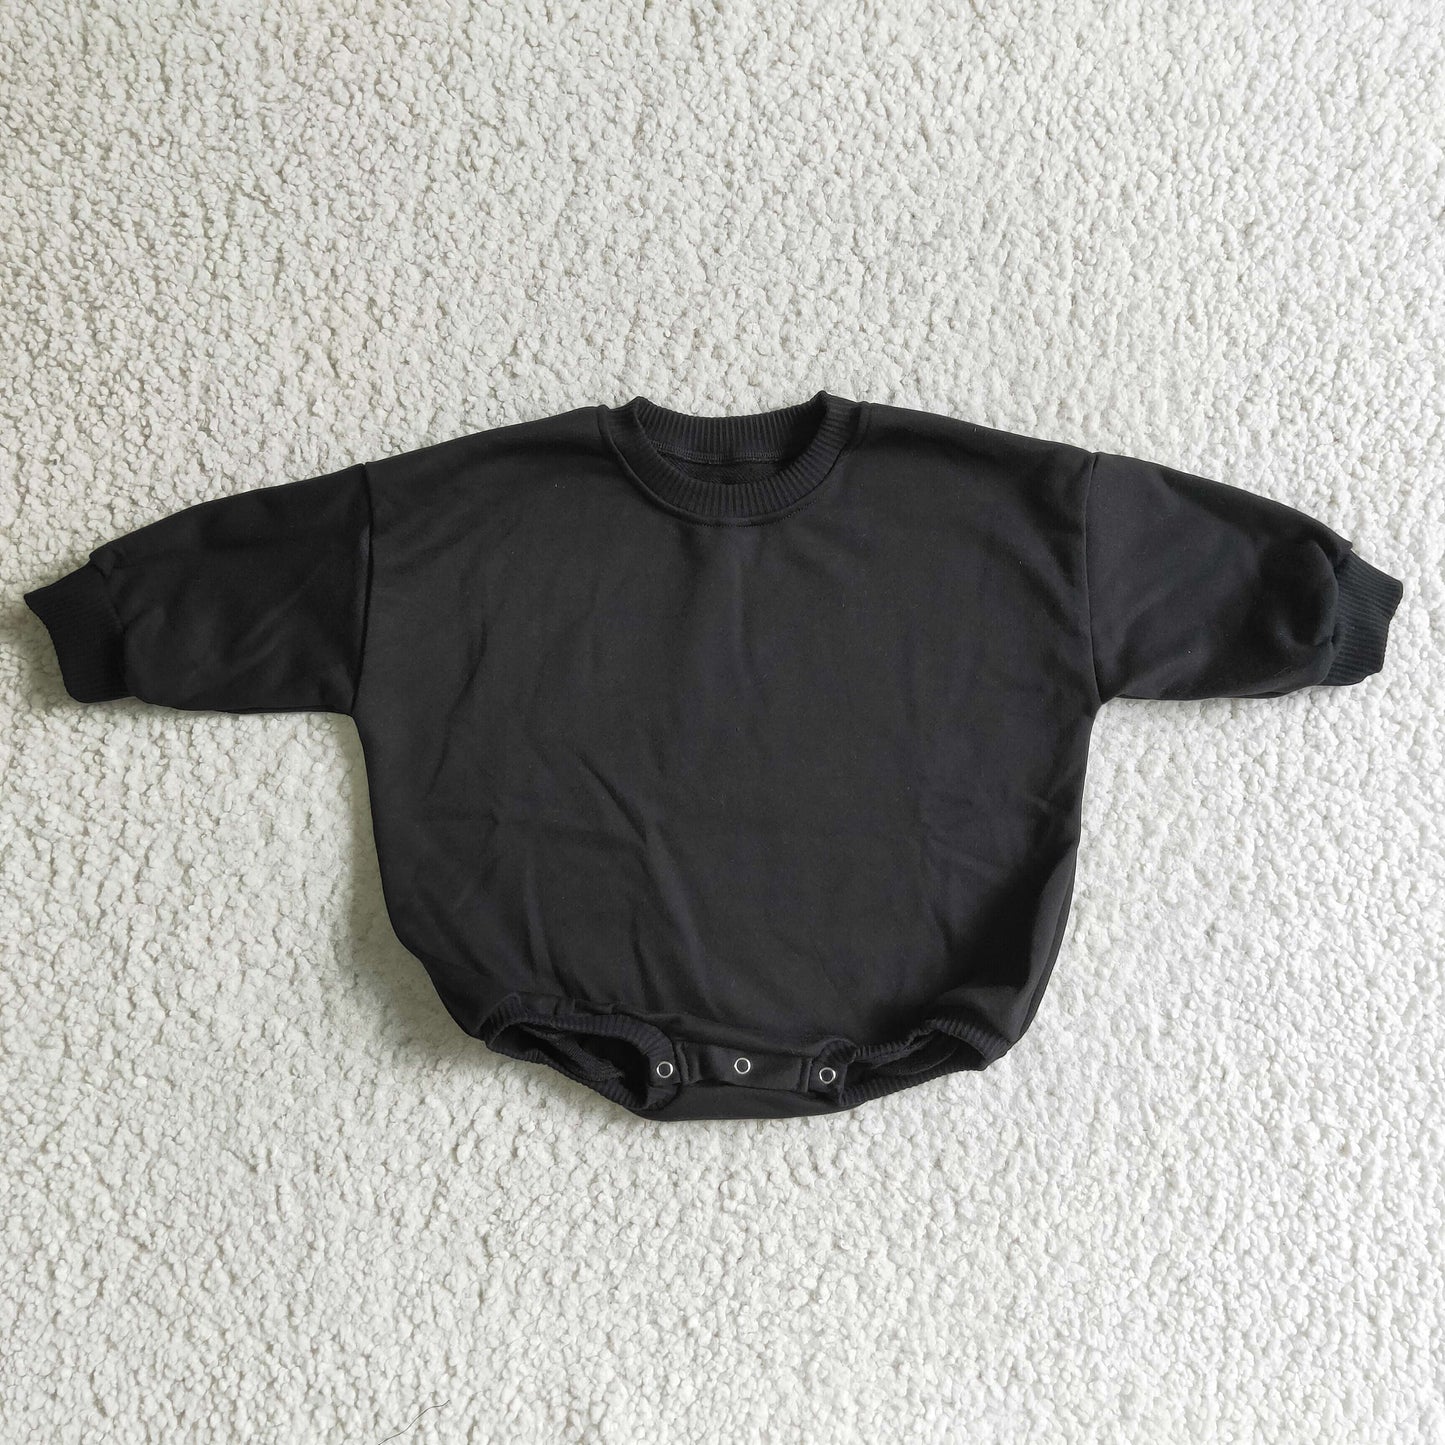 Black cotton long sleeves baby girls sweater romper